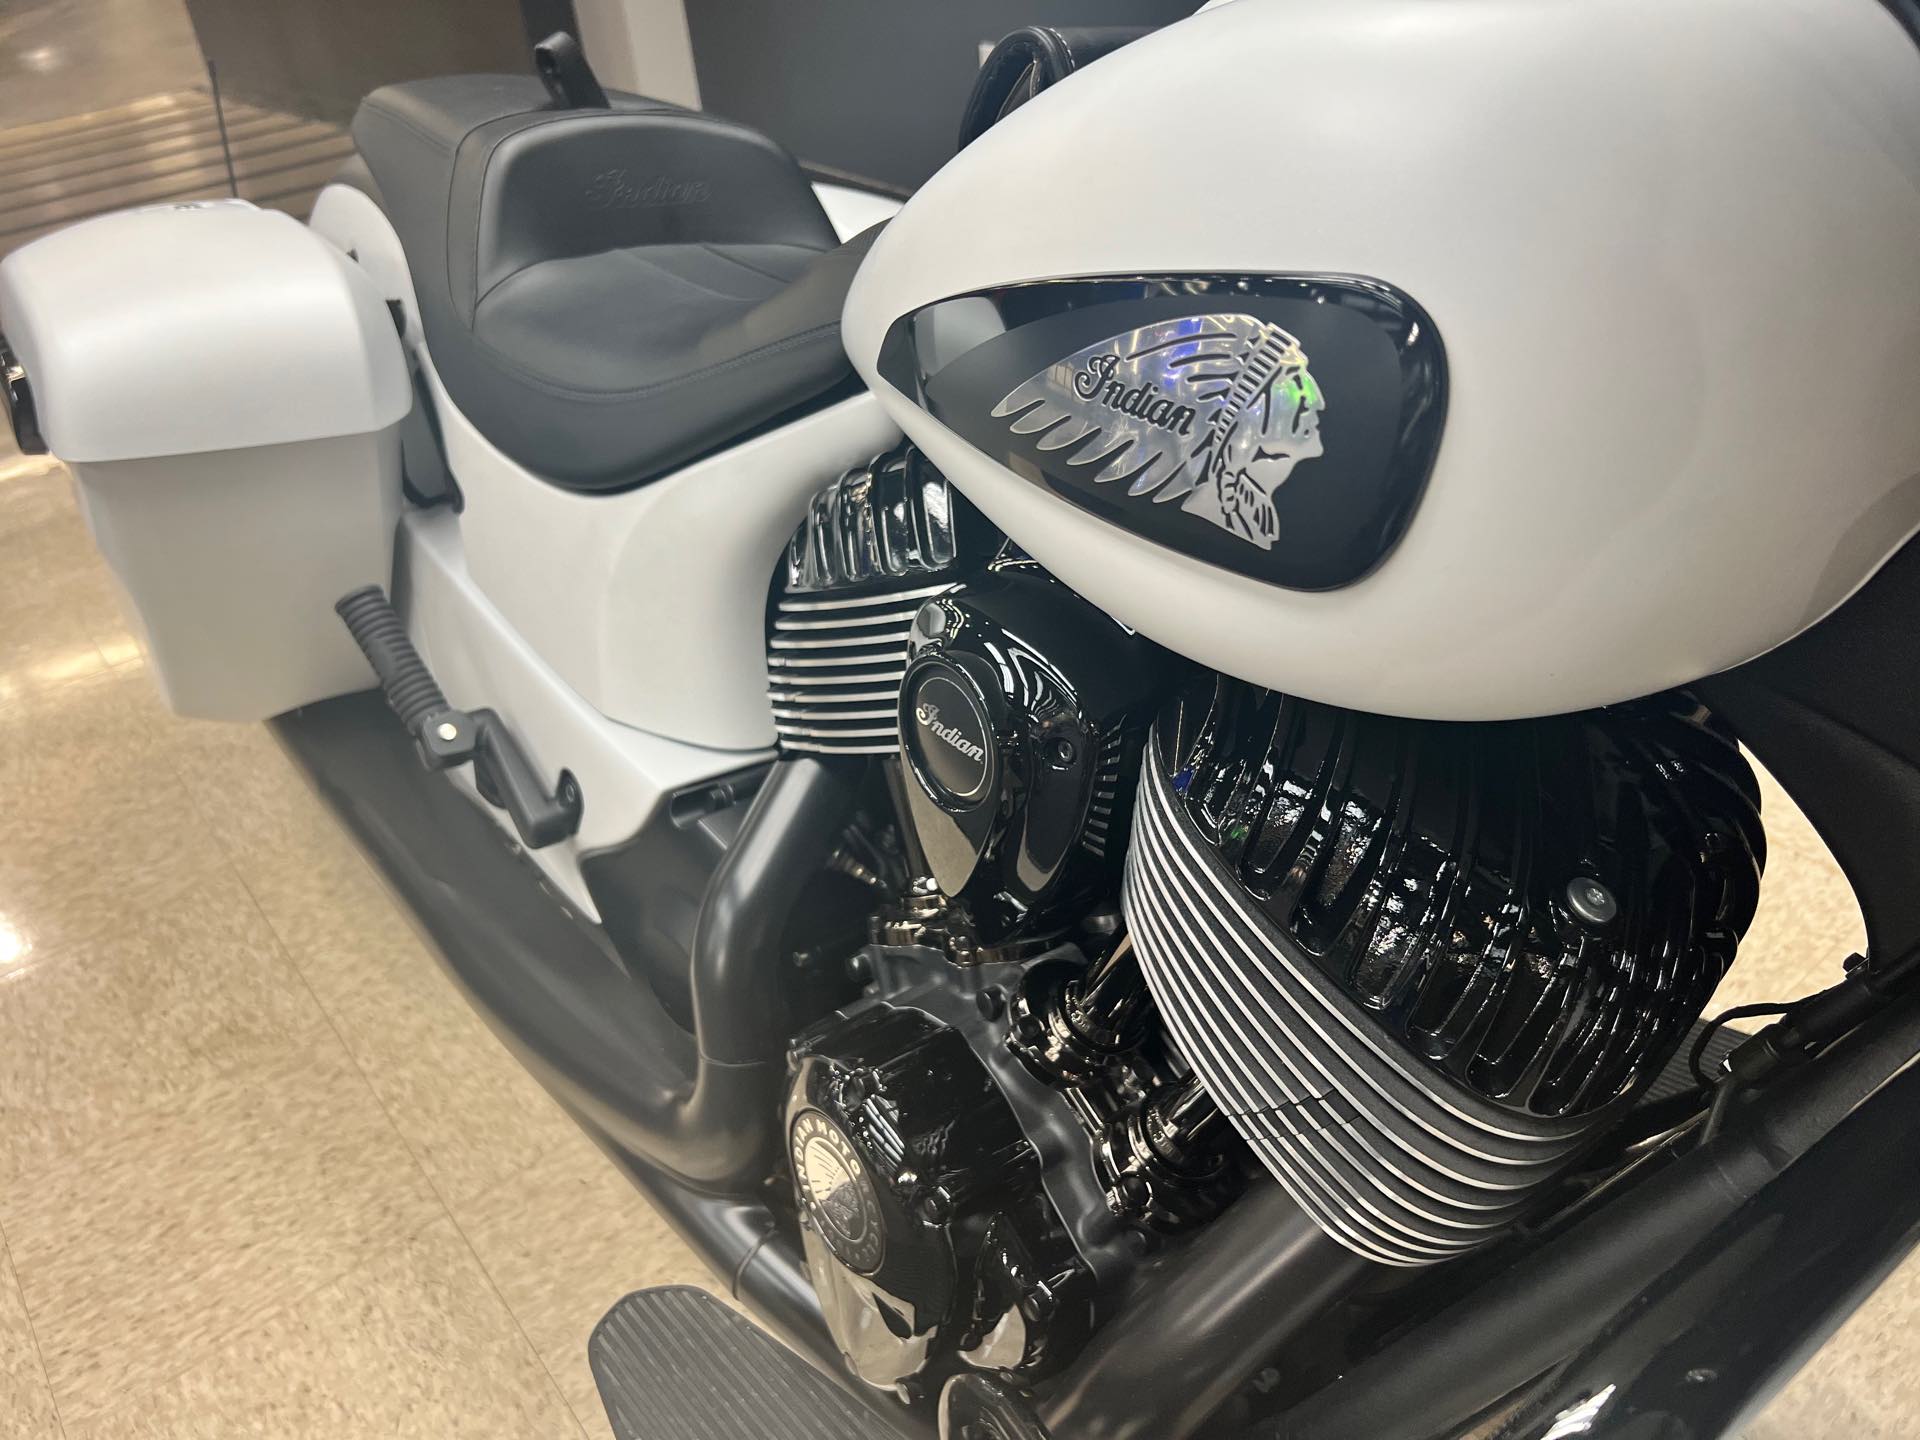 2019 Indian Motorcycle Chieftain Dark Horse at Sloans Motorcycle ATV, Murfreesboro, TN, 37129